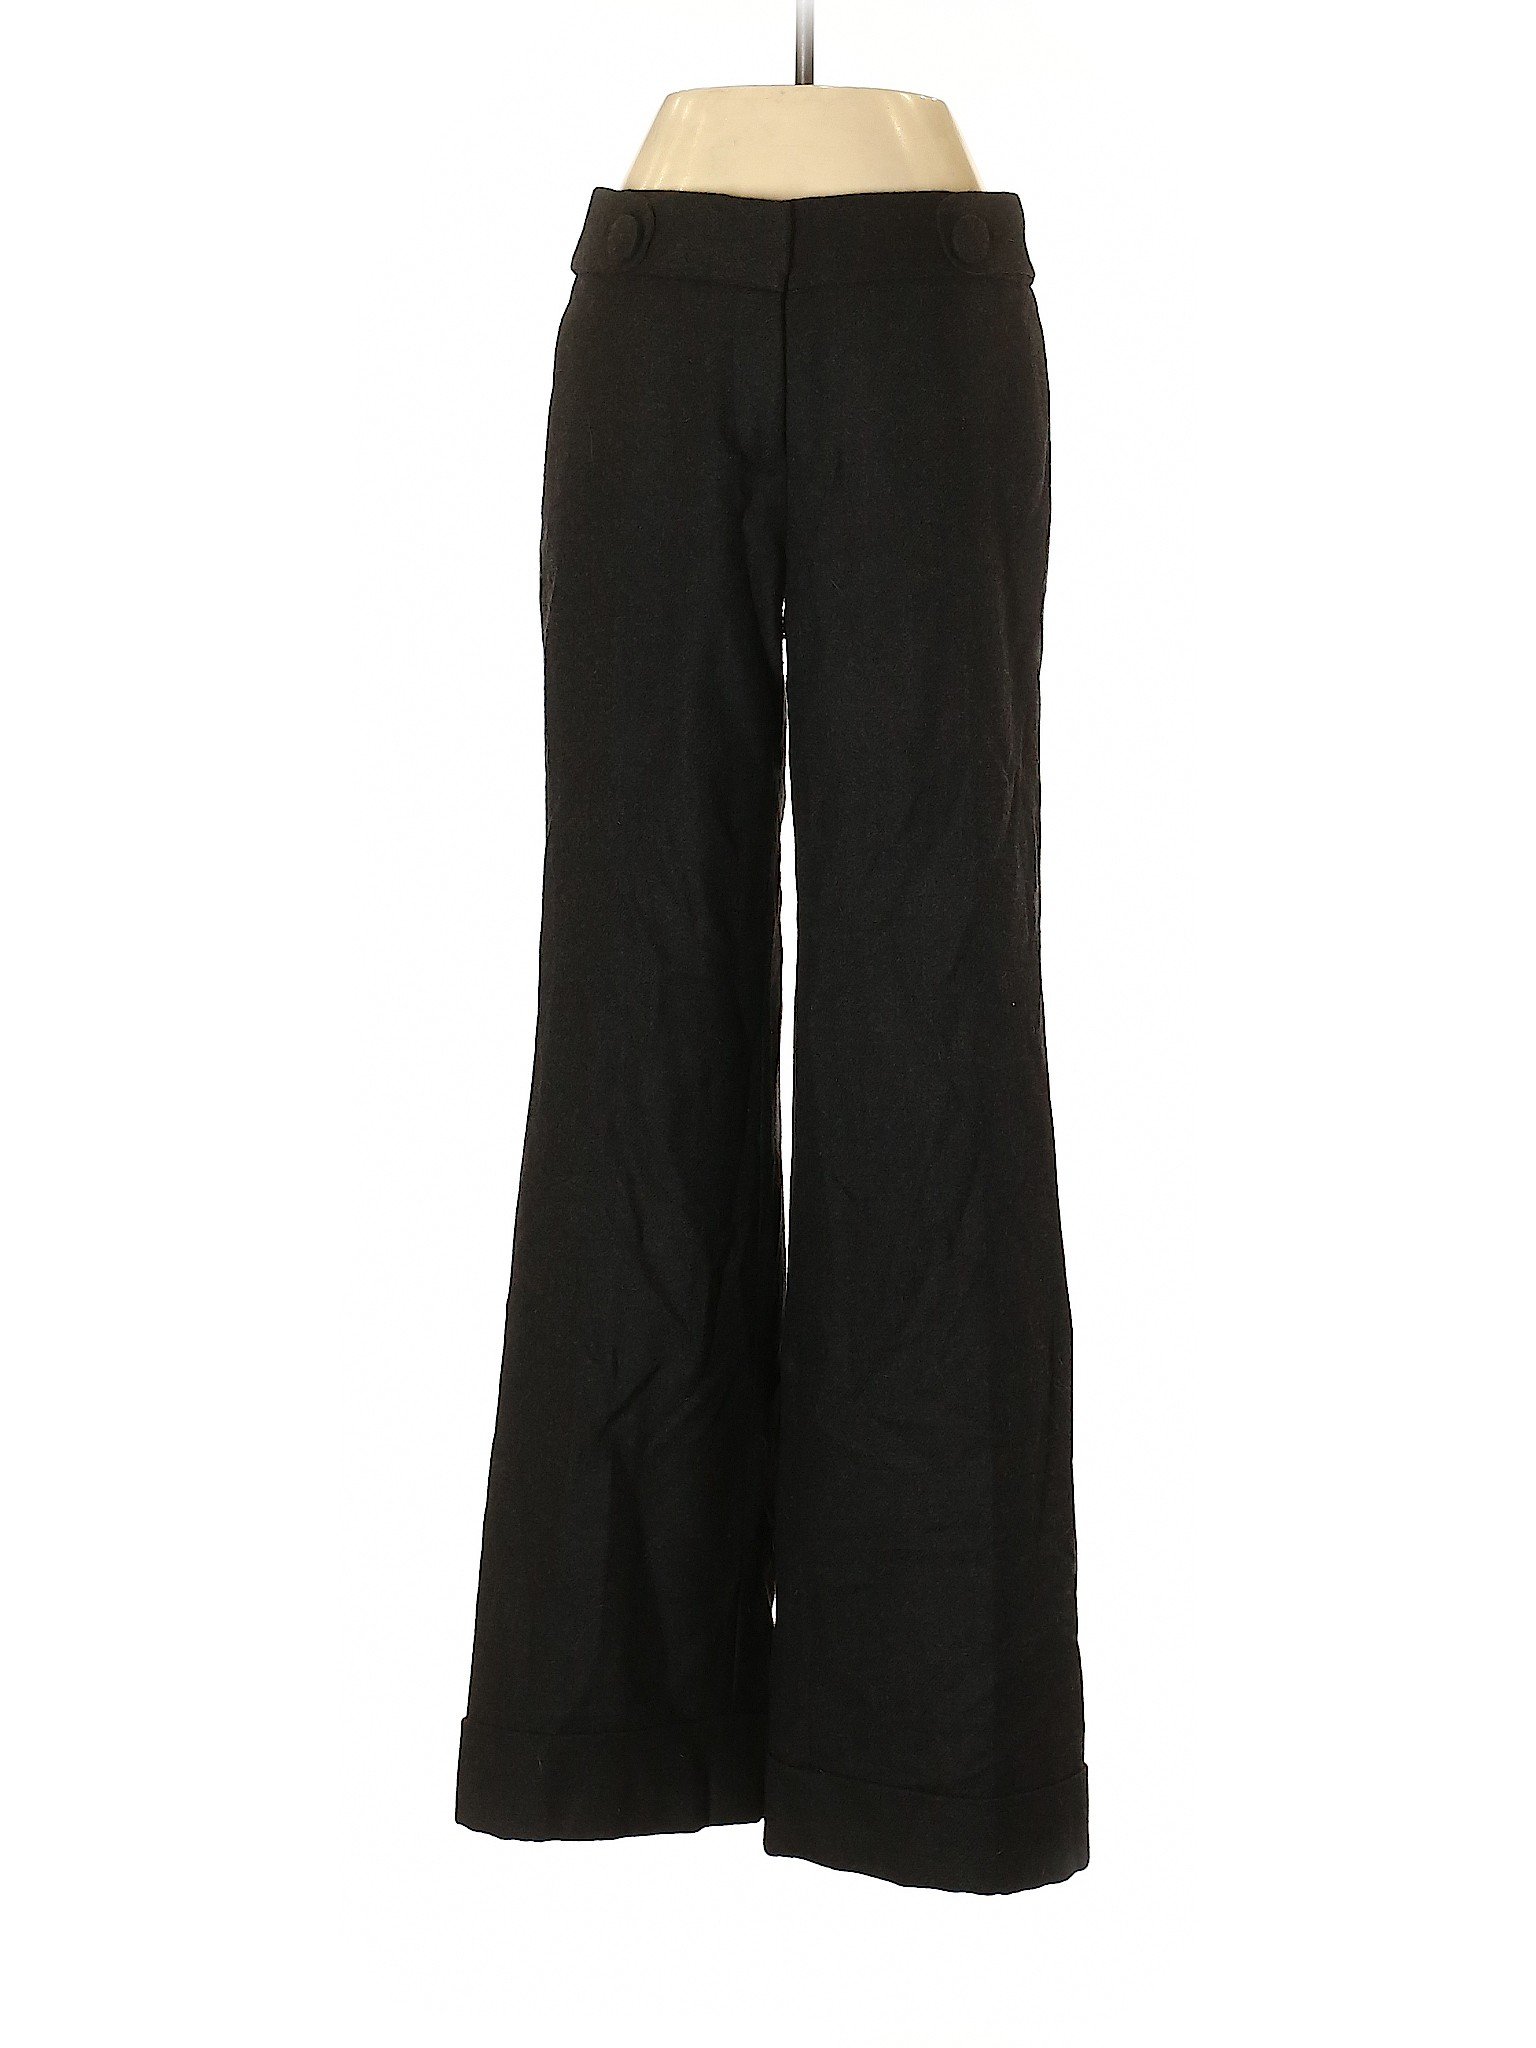 J.Crew Factory Store Women Black Wool Pants 0 | eBay